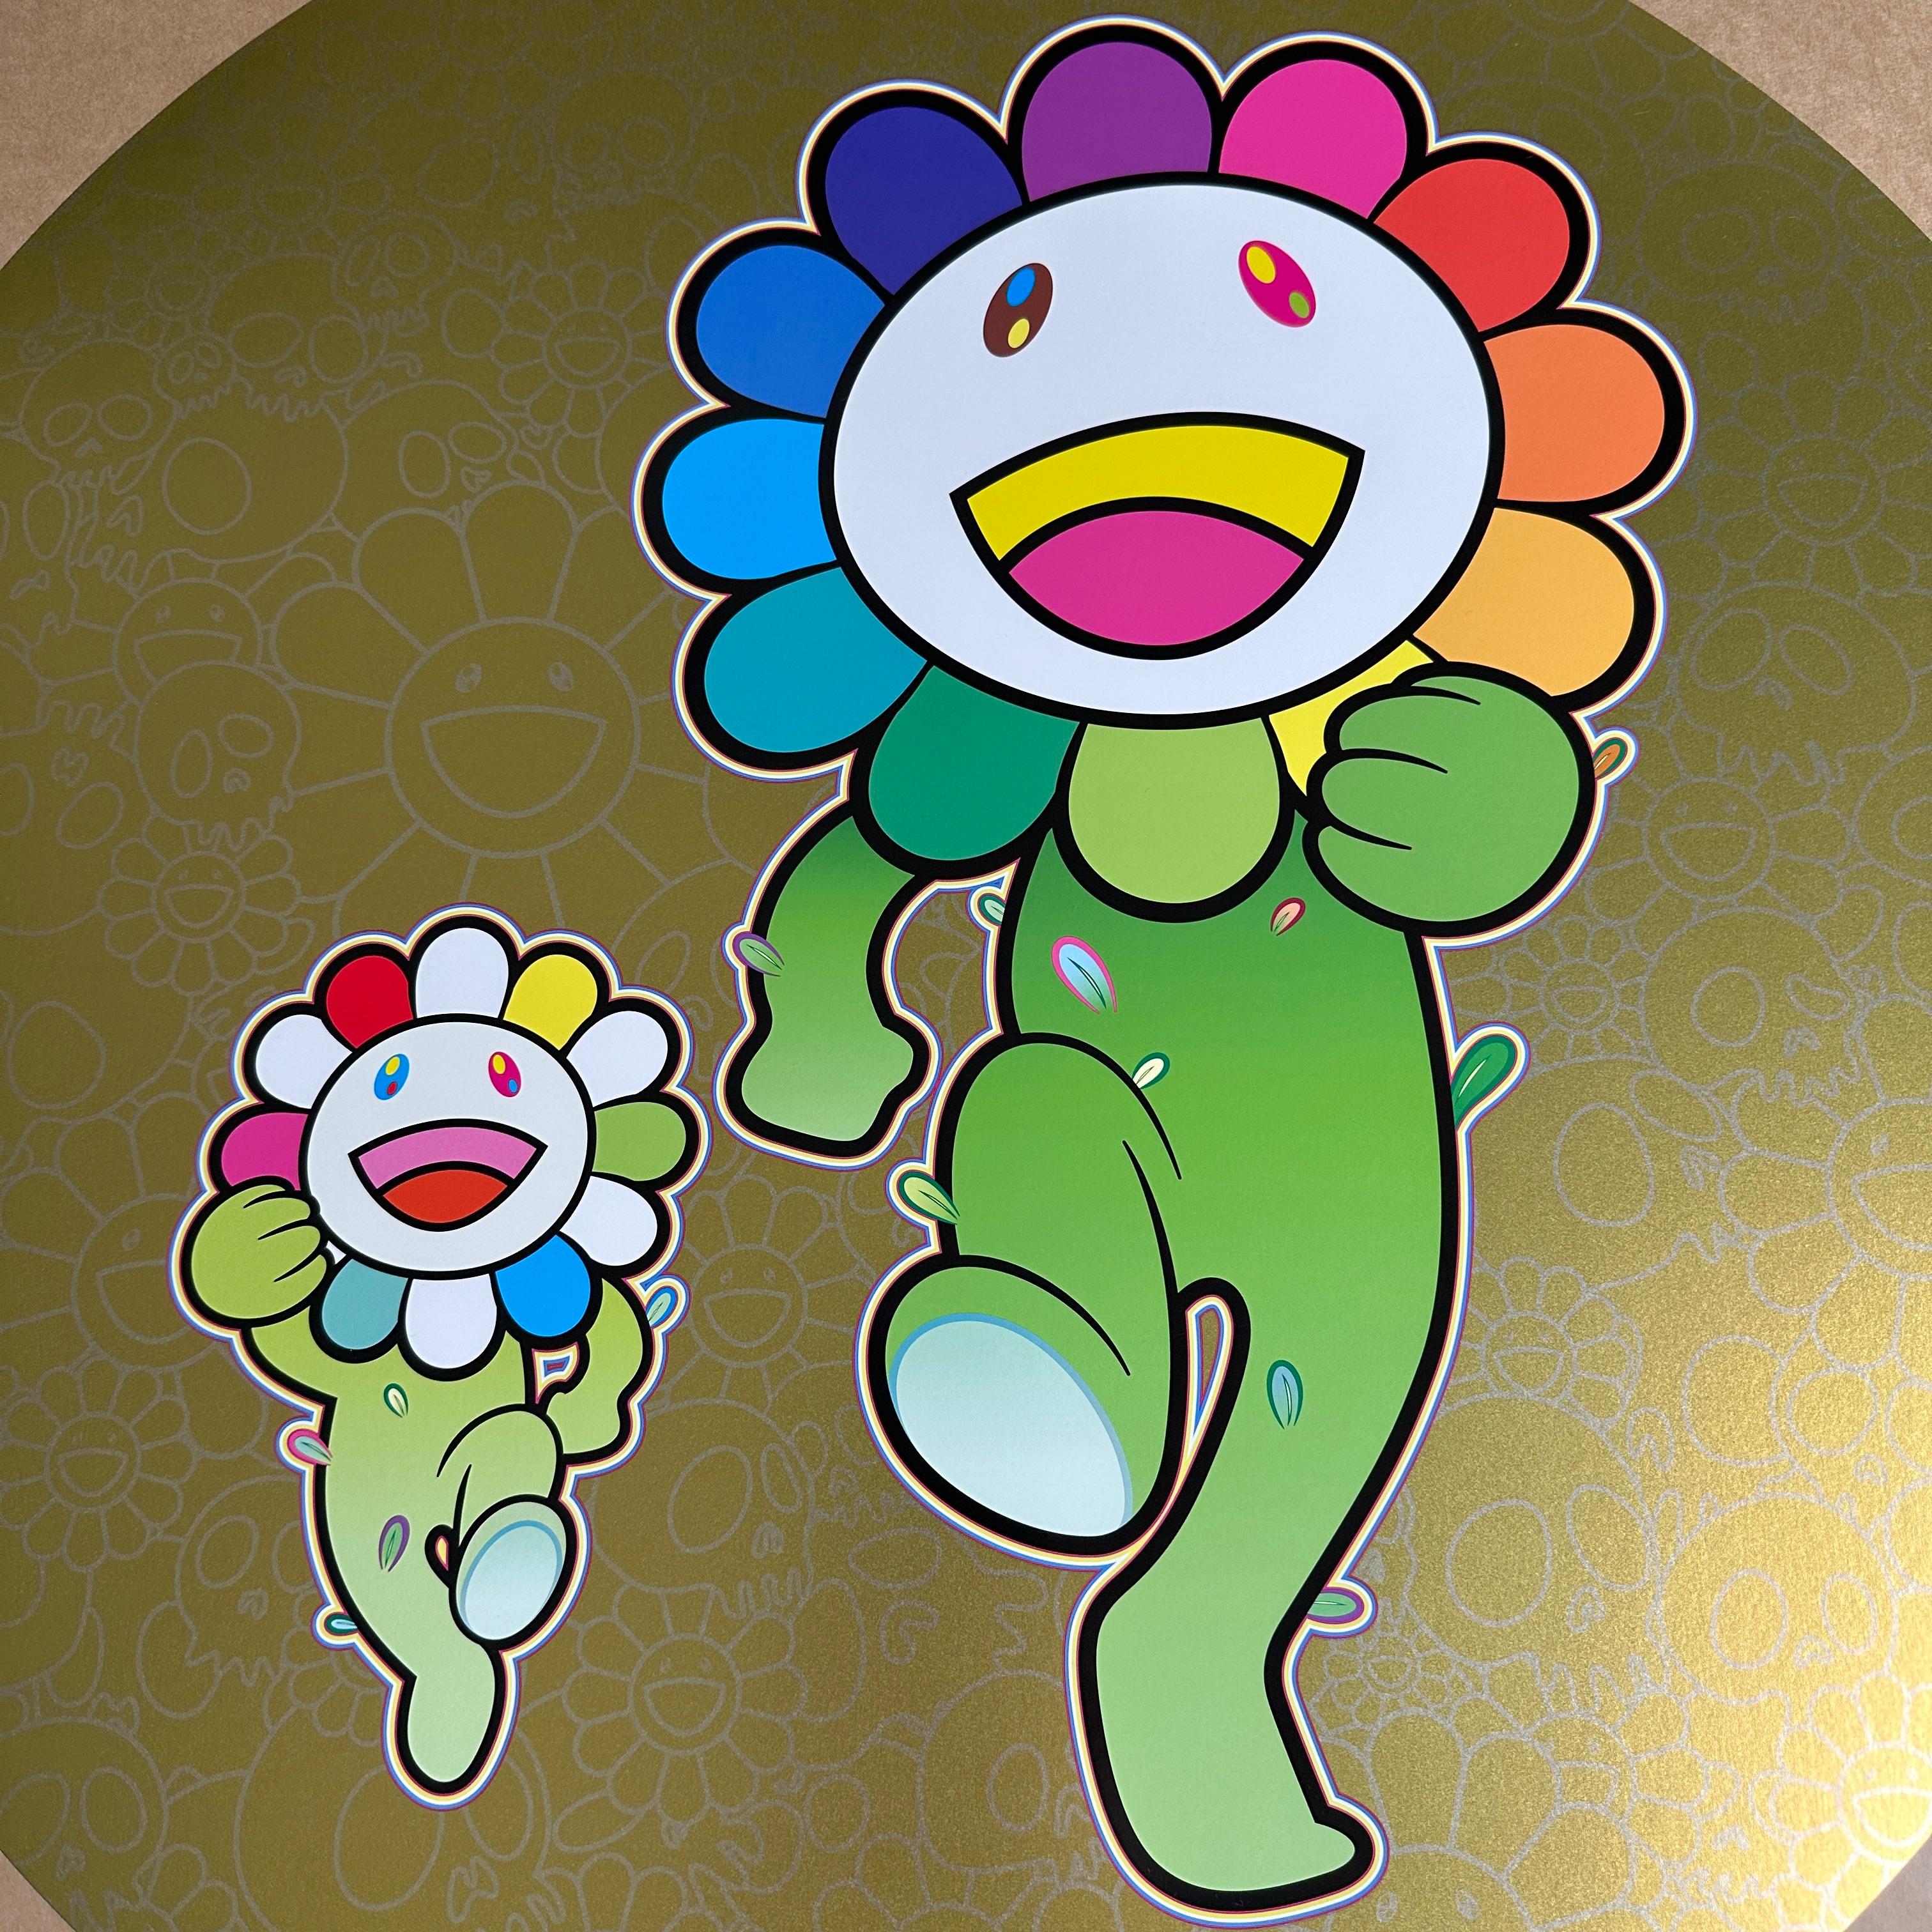 Flower Parent and Child, Rum Pum Pum! (Takashi Murakami, Gold, flowers, Japan) For Sale 5